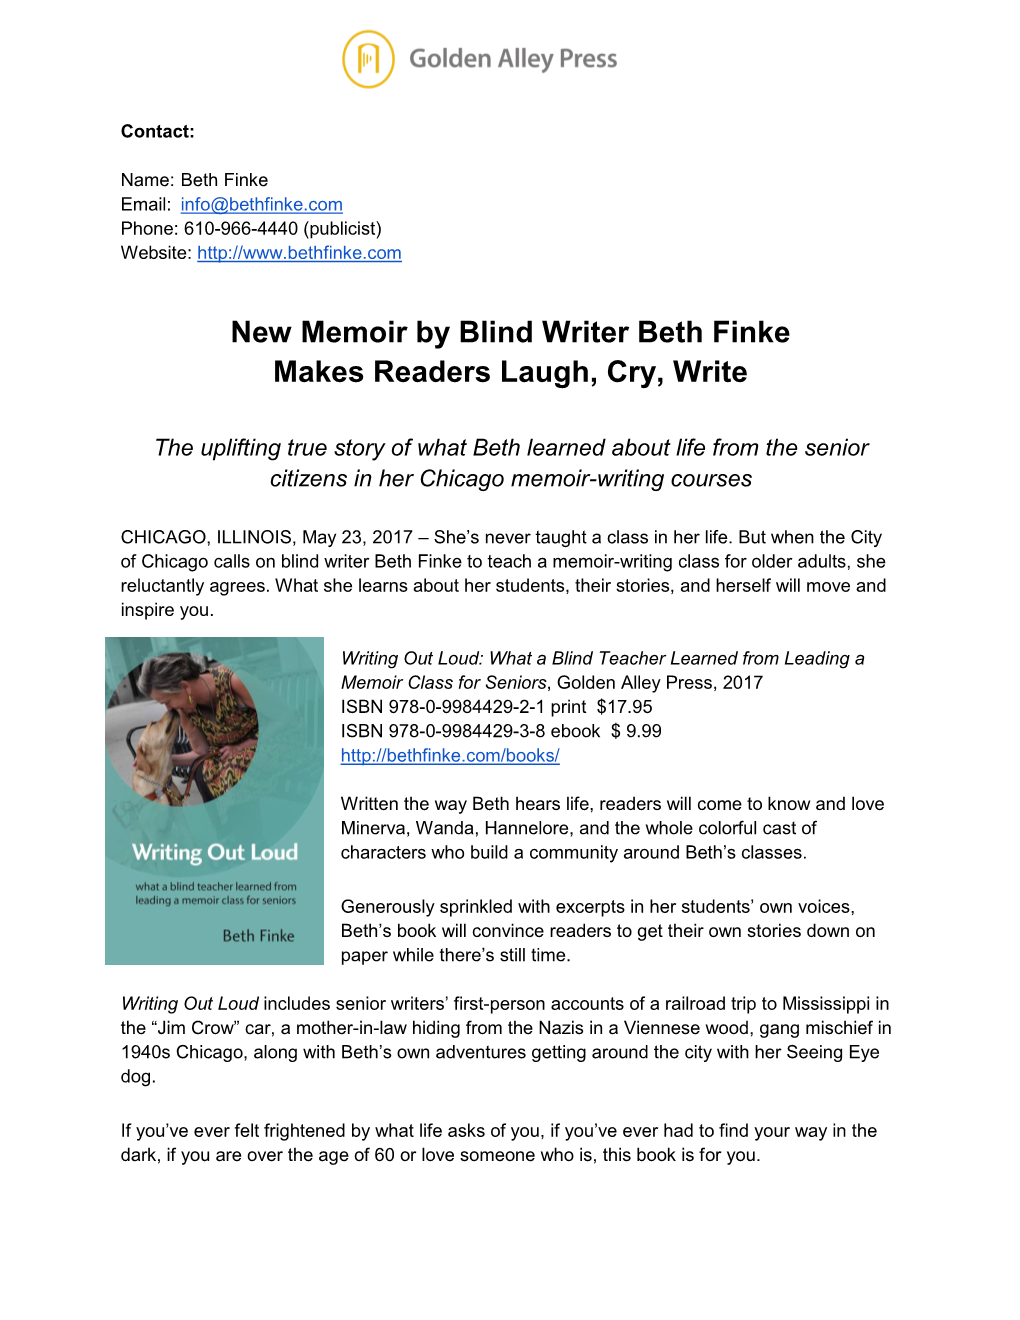 New Memoir by Blind Writer Beth Finke Makes Readers Laugh, Cry, Write